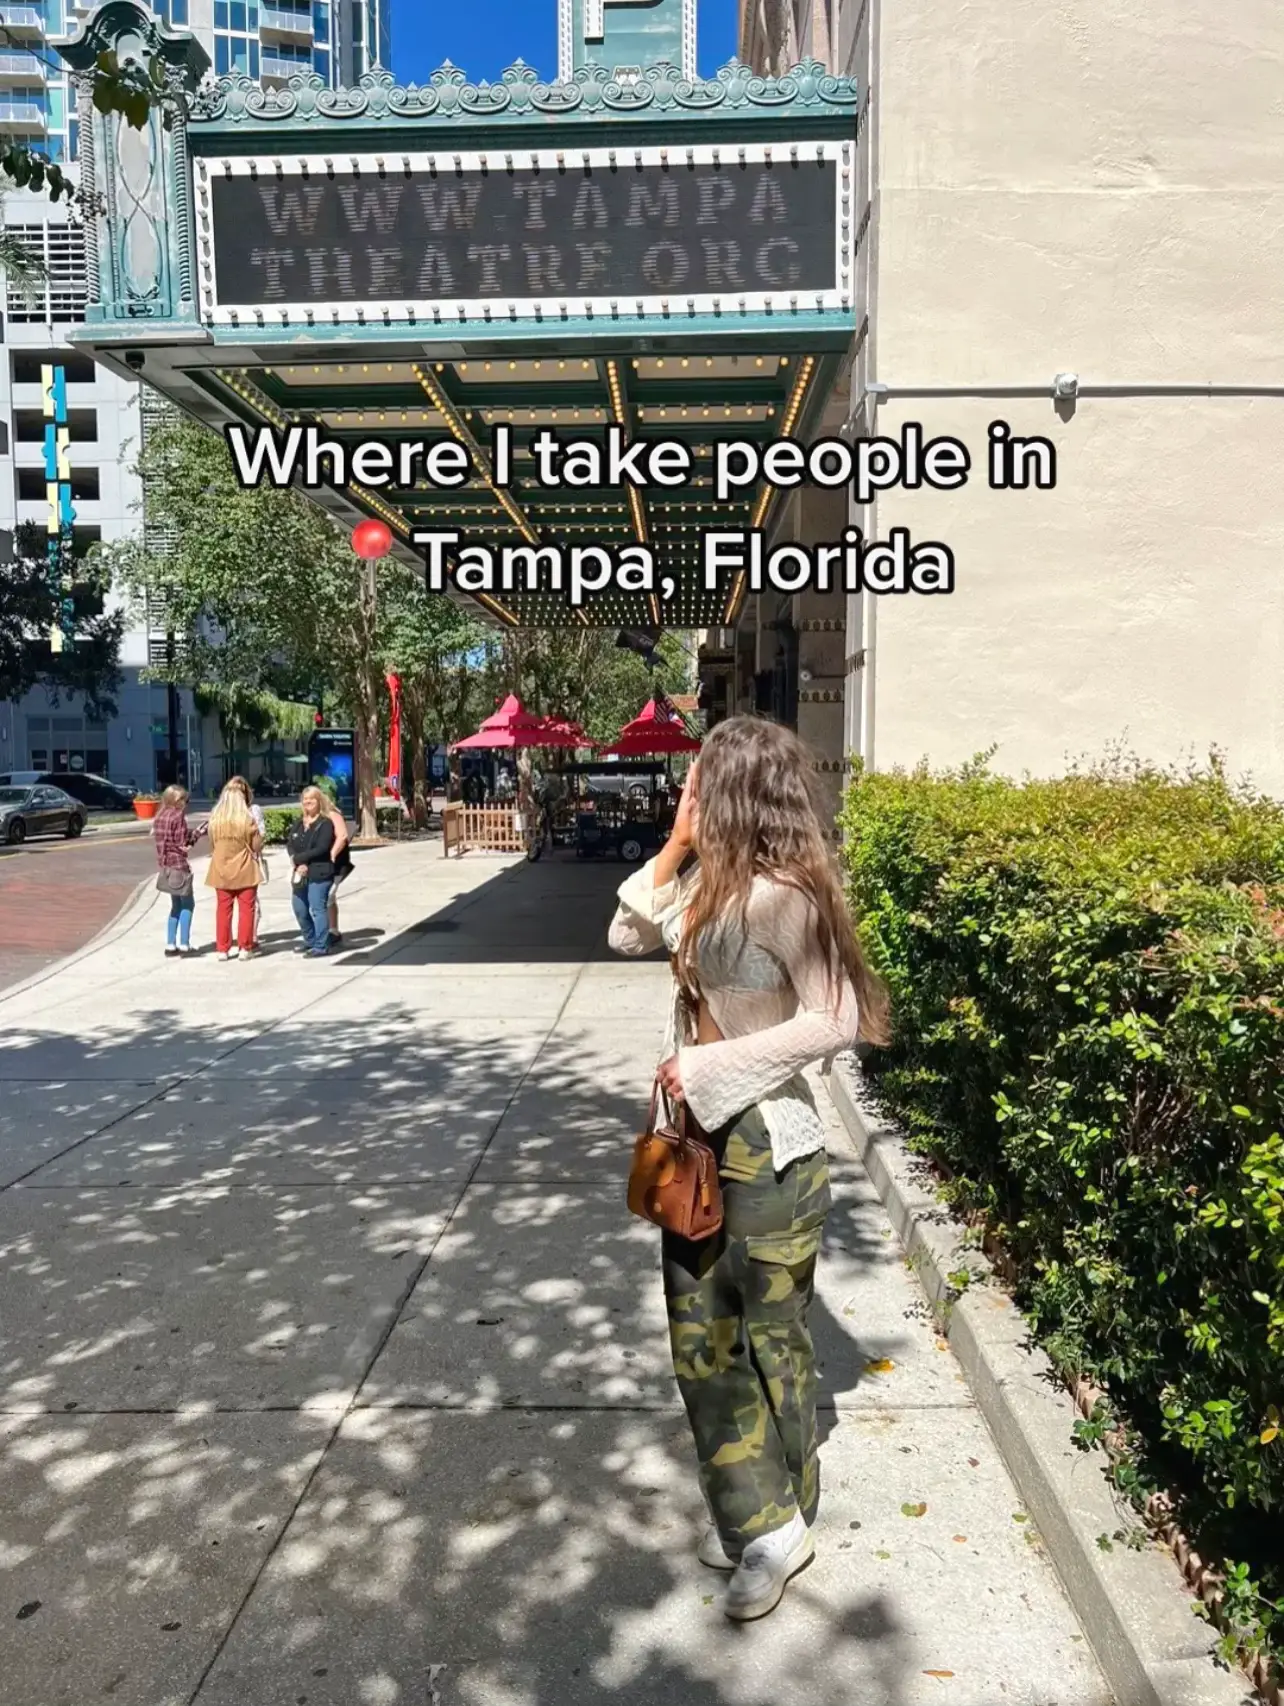  A woman is walking down a sidewalk in Tampa, Florida.